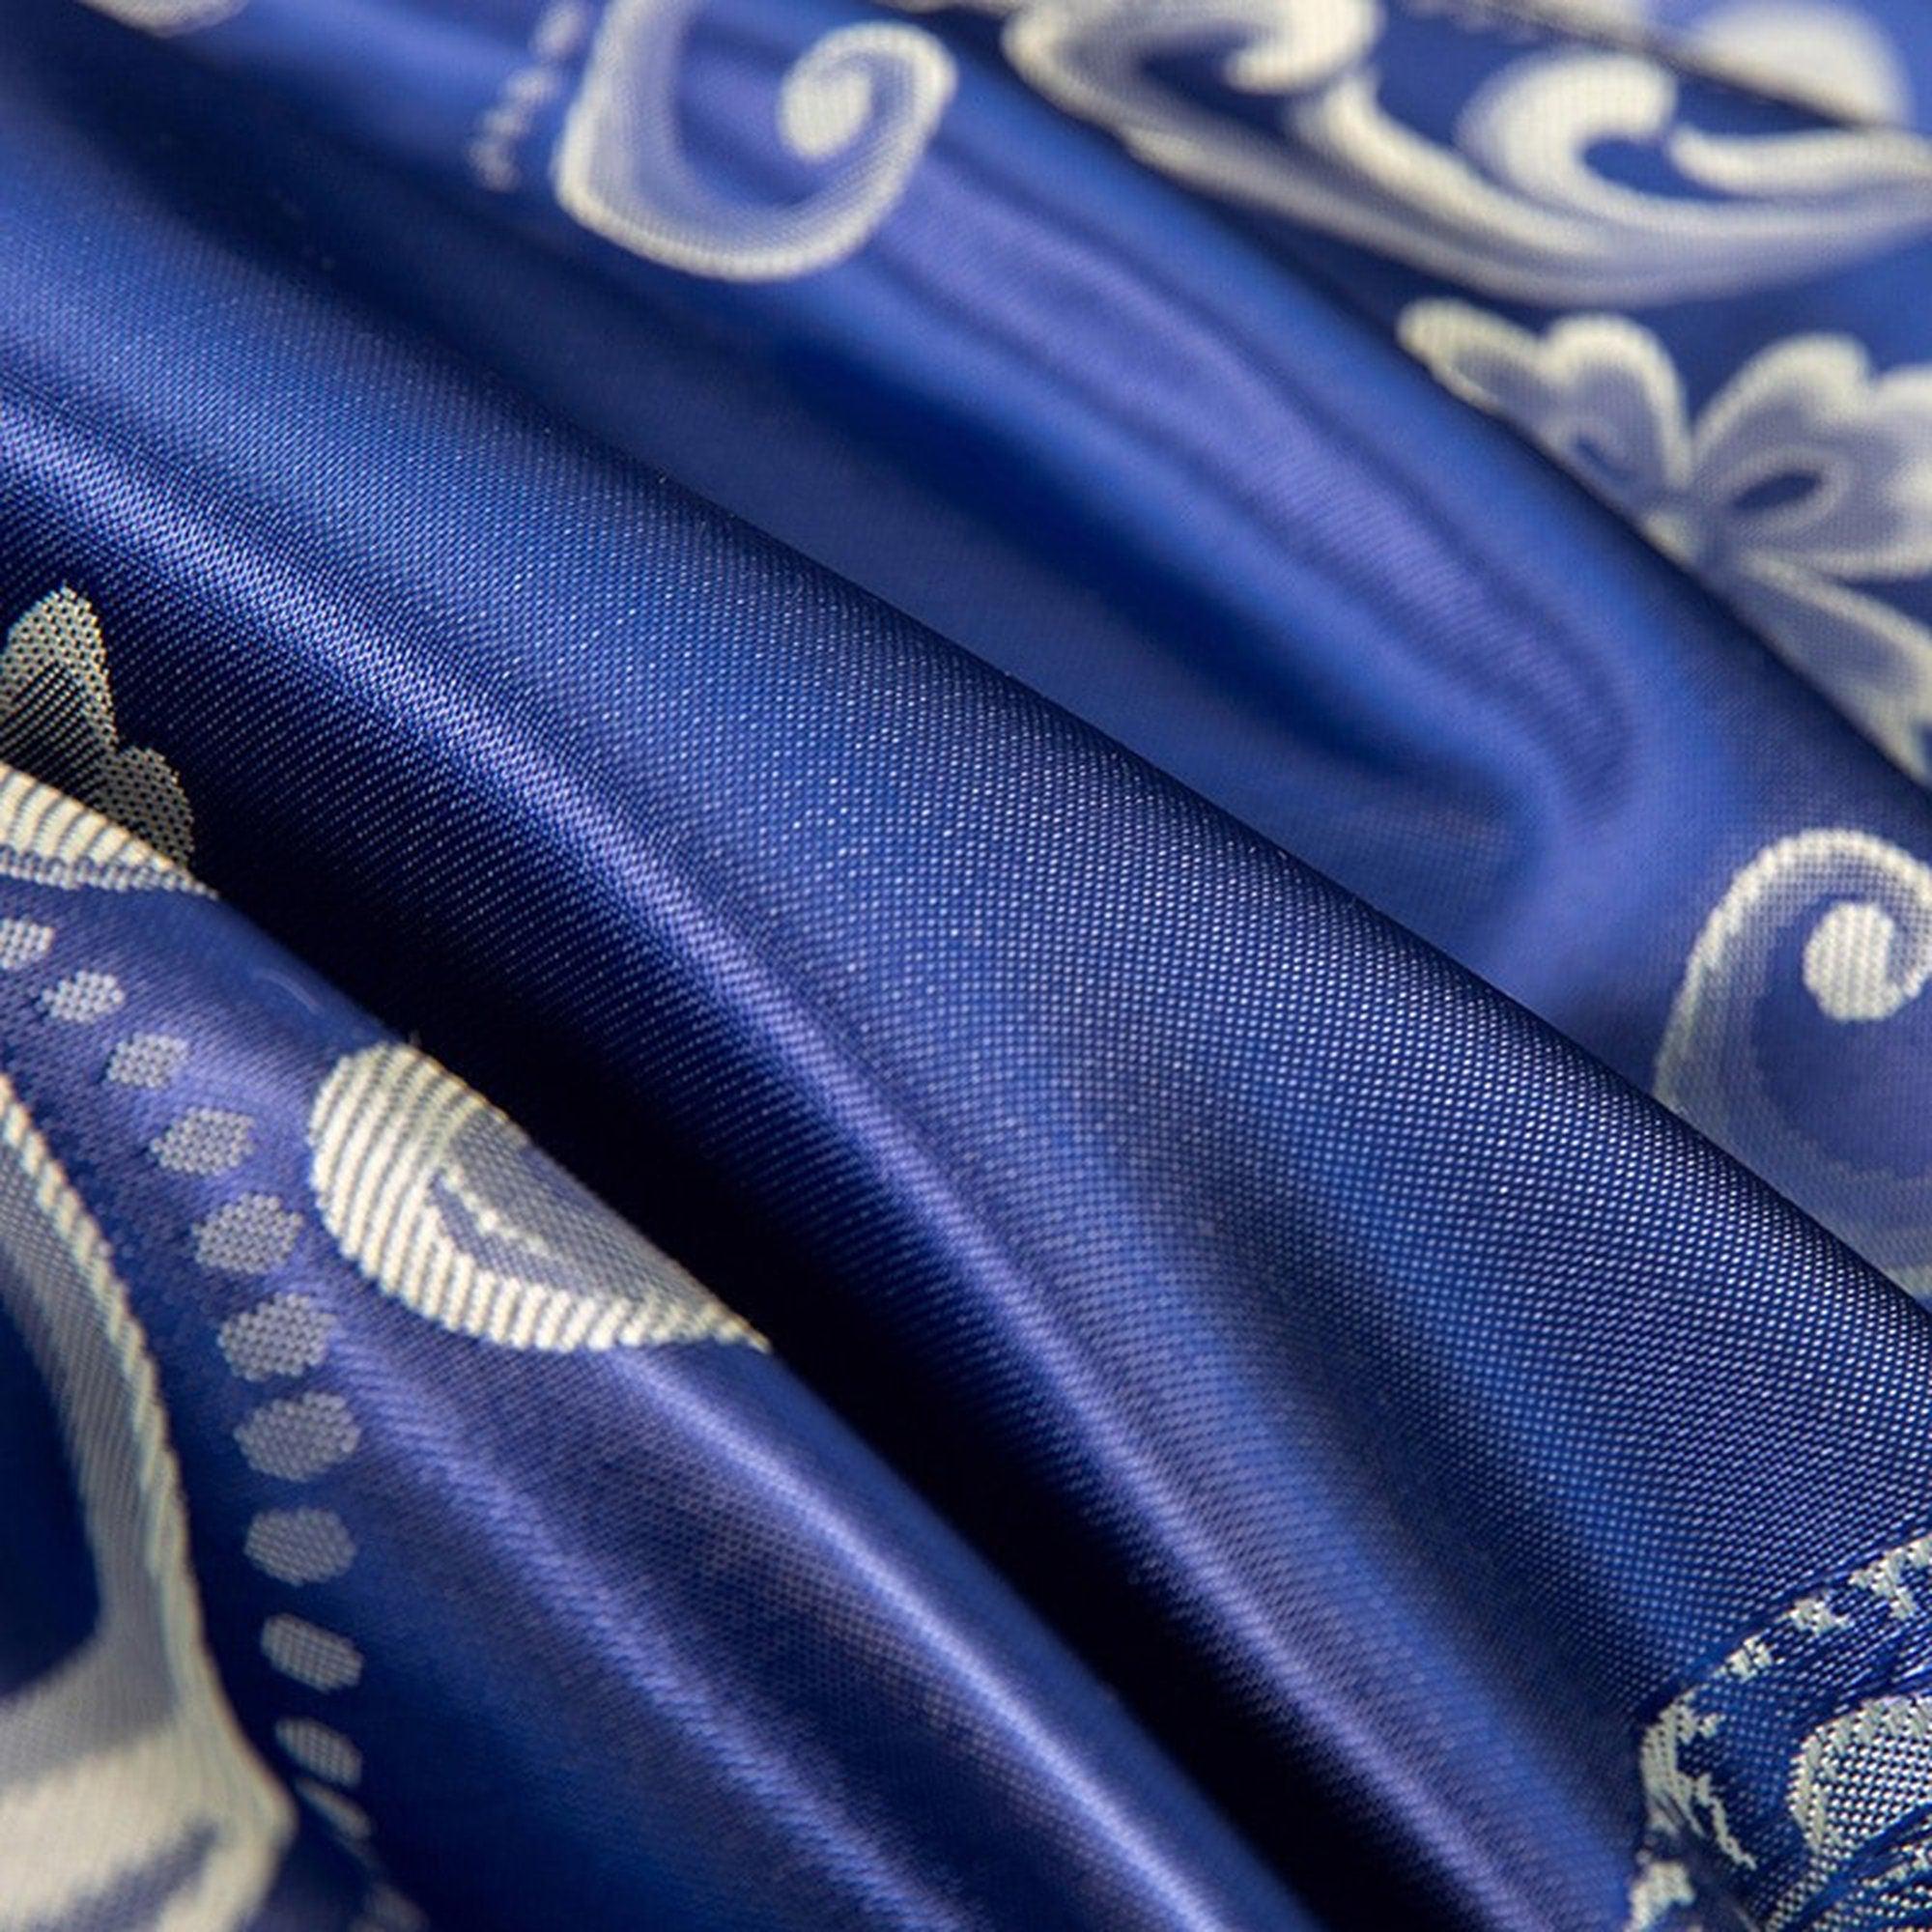 daintyduvet Sapphire Blue Luxury Bedding made with Silky Jacquard Fabric, Embroidered Duvet Cover Set, Designer Bedding, Aesthetic Duvet King Queen Full